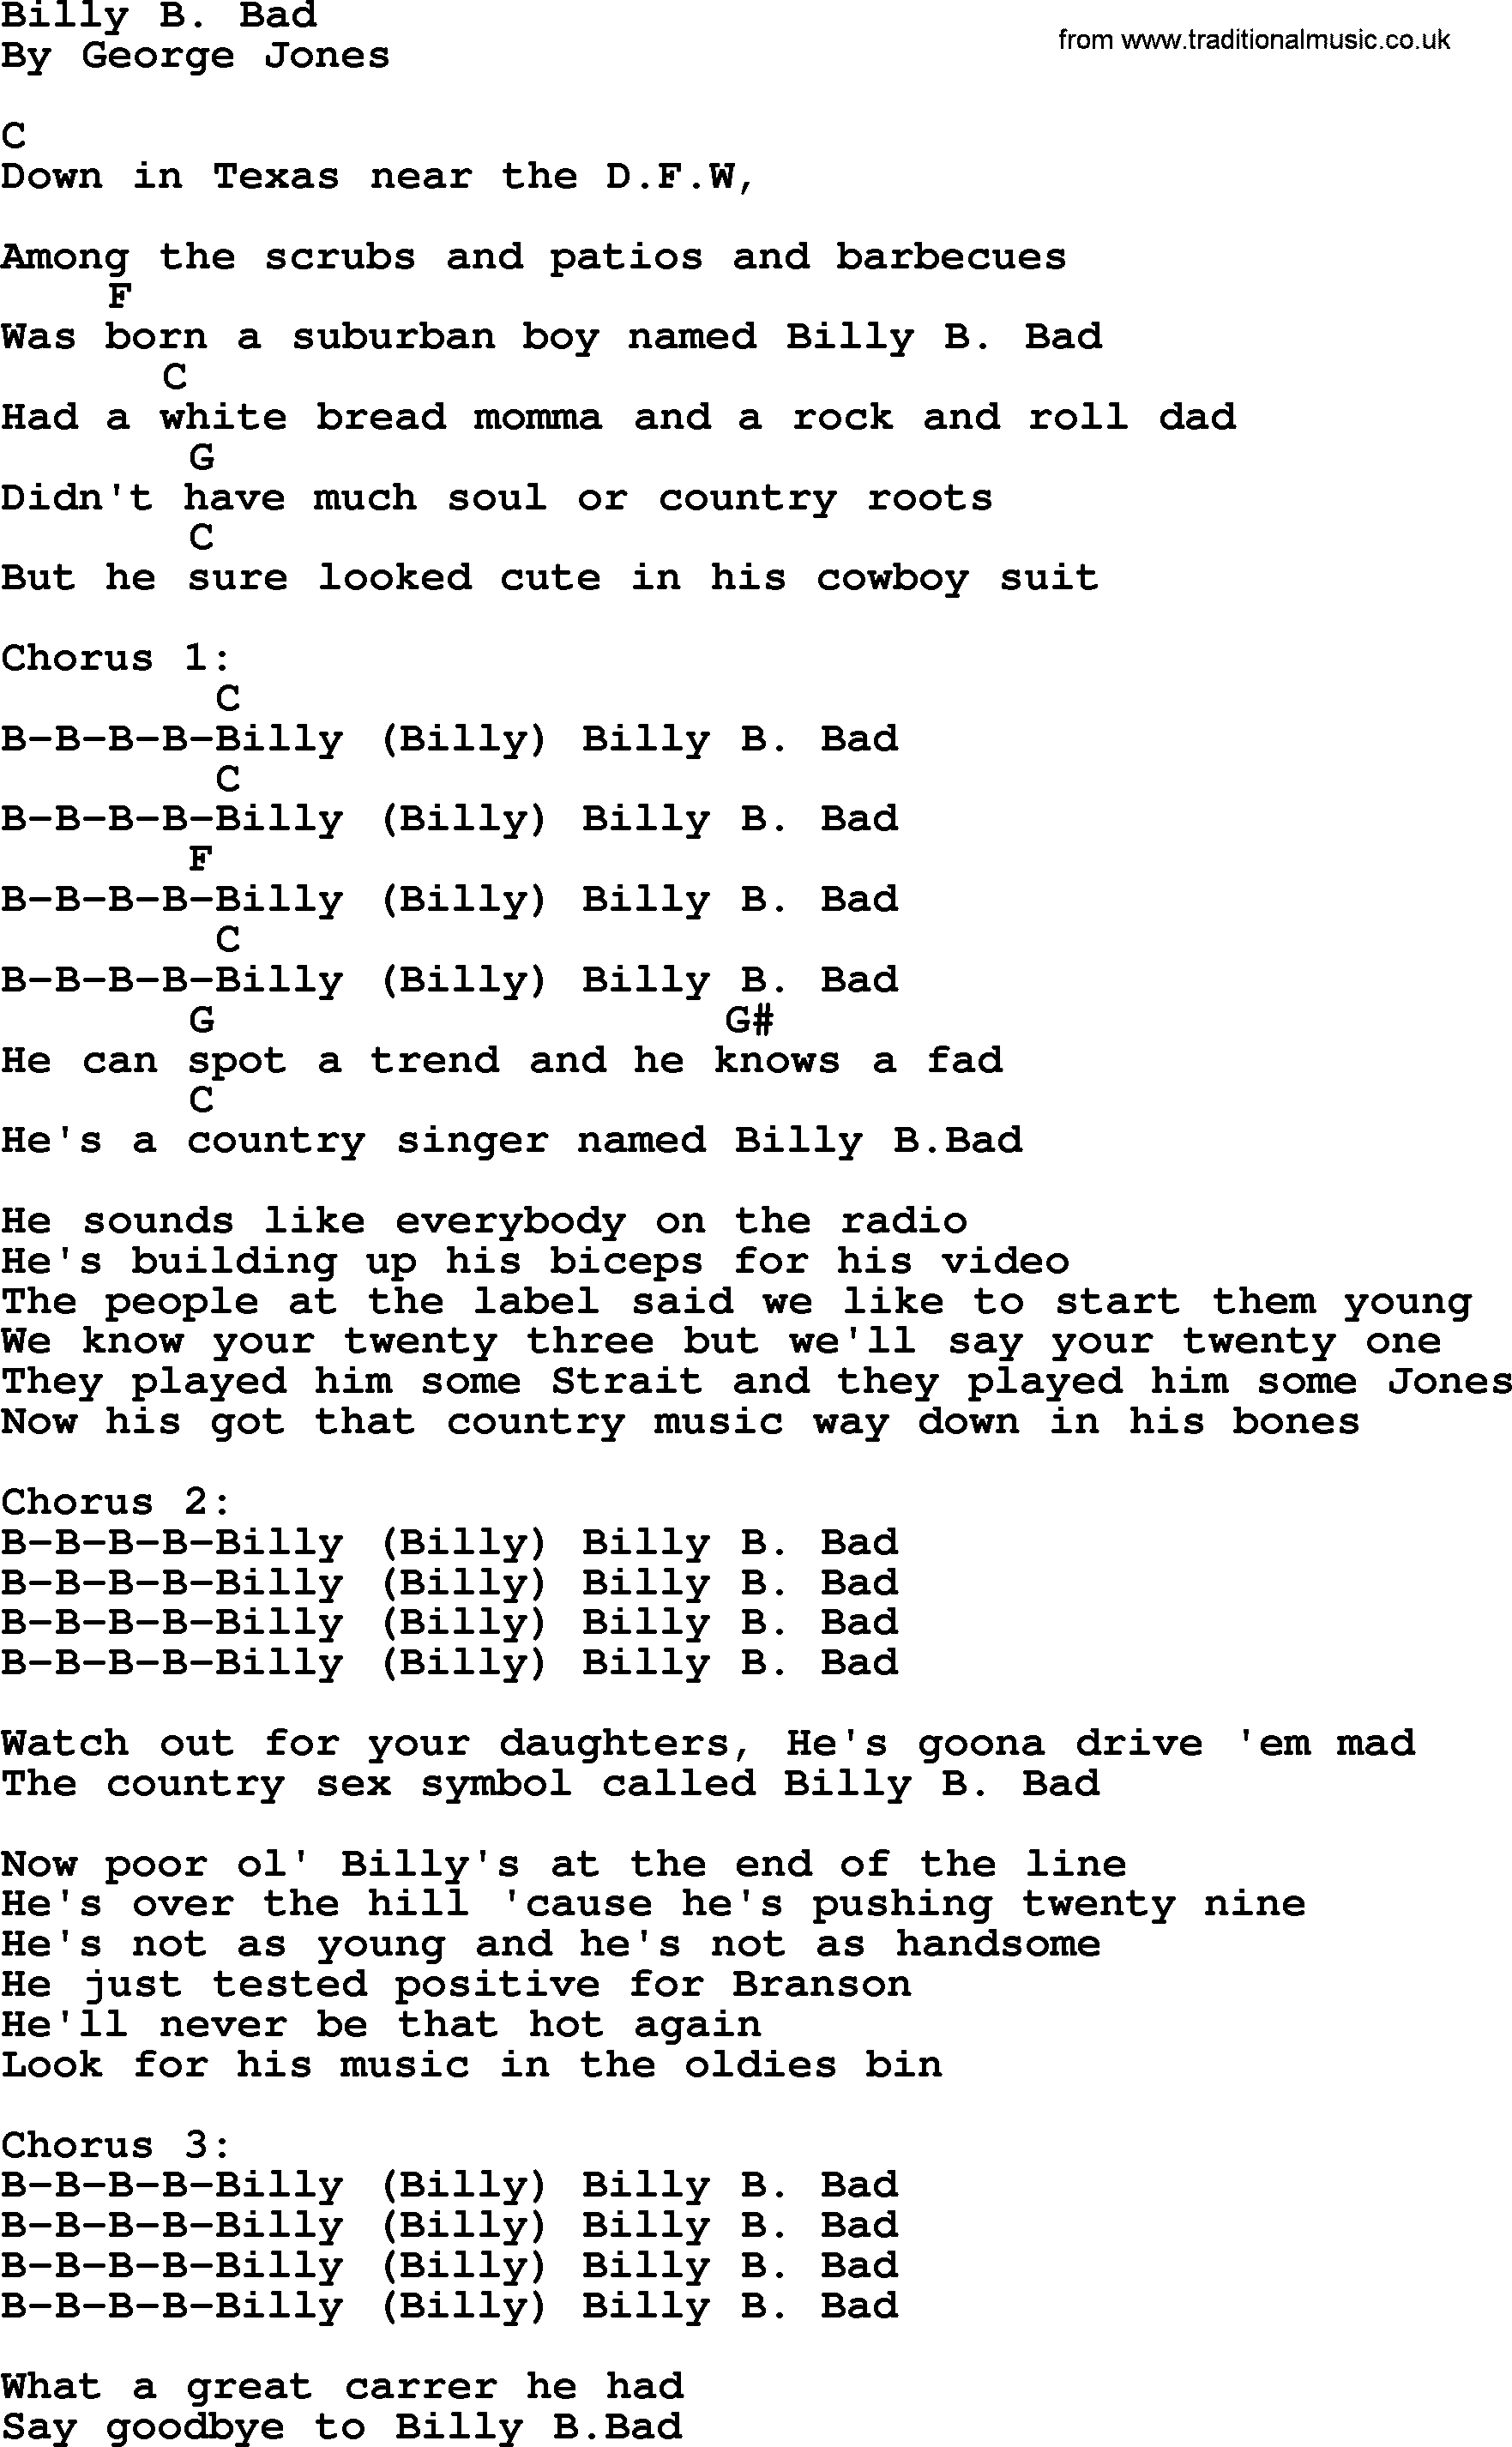 George Jones song: Billy B. Bad, lyrics and chords